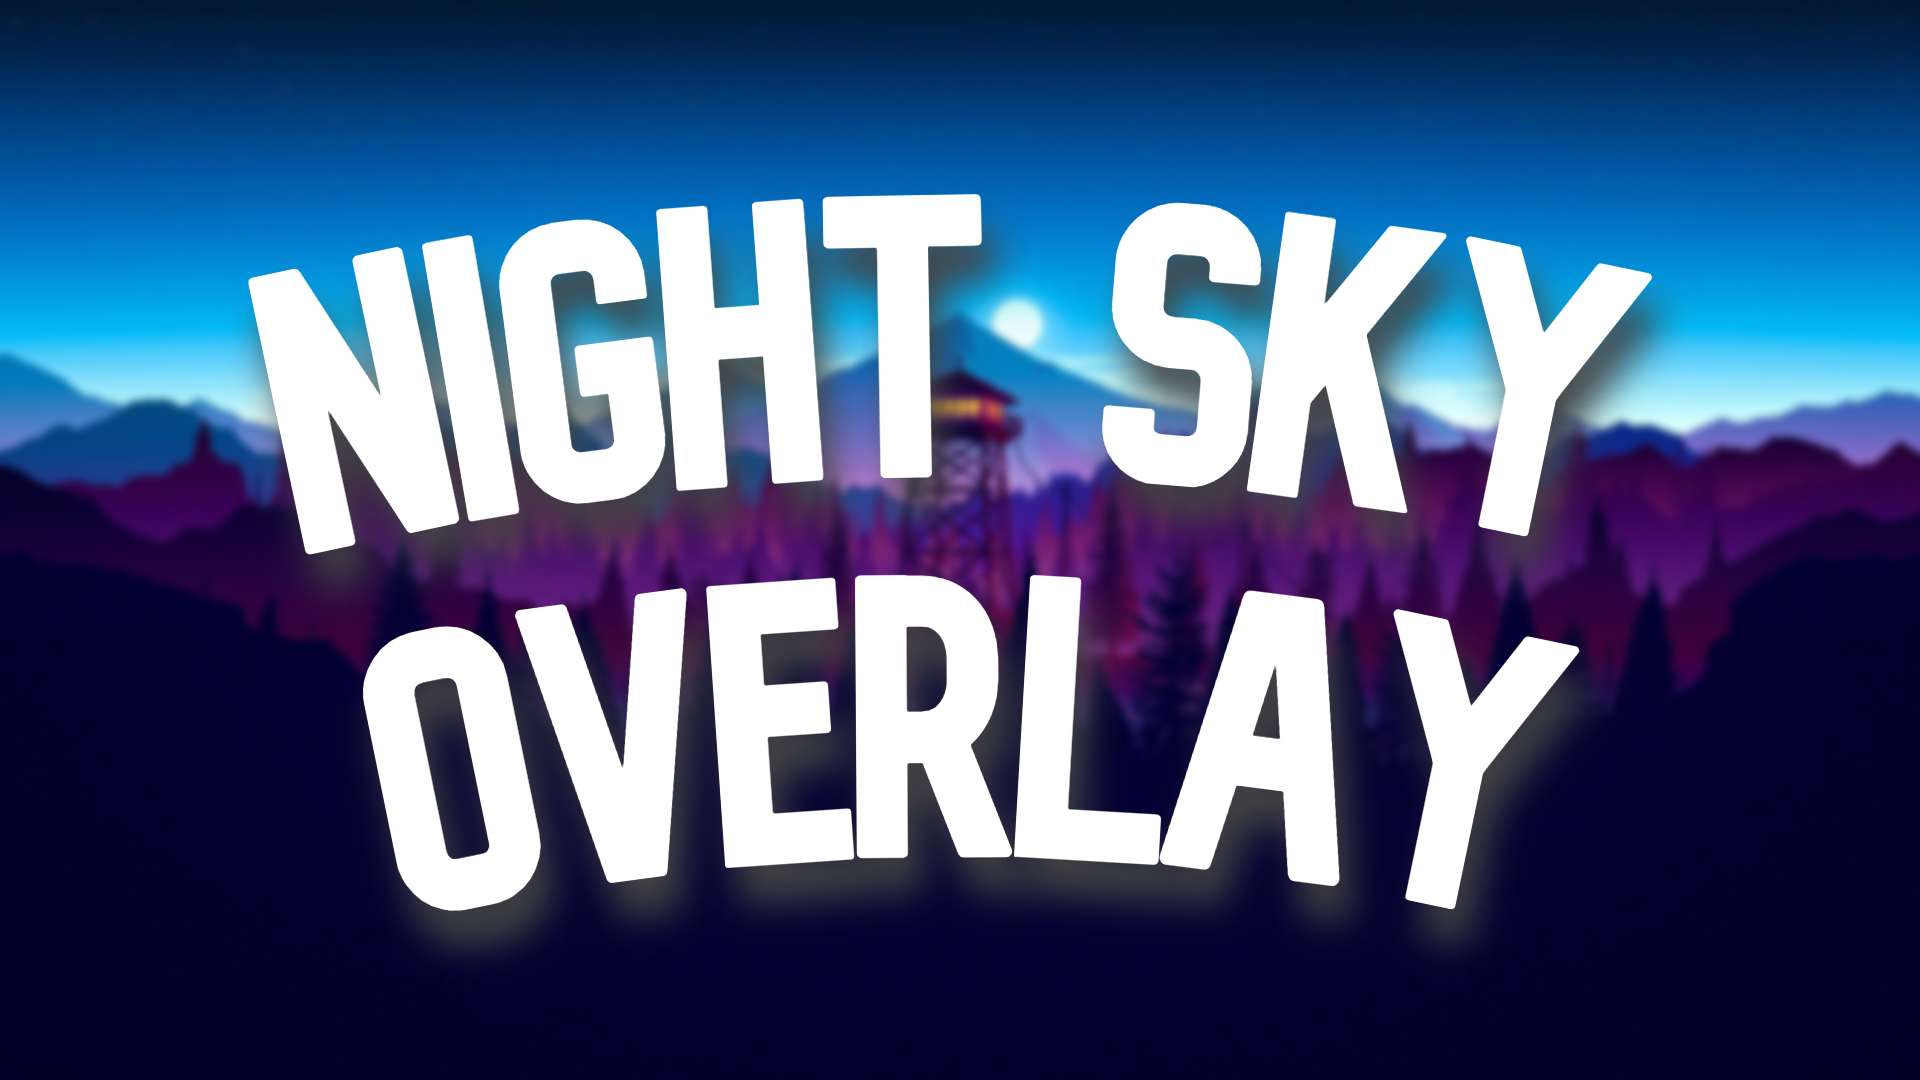 Night Sky Overlay #13 16 by rh56 on PvPRP